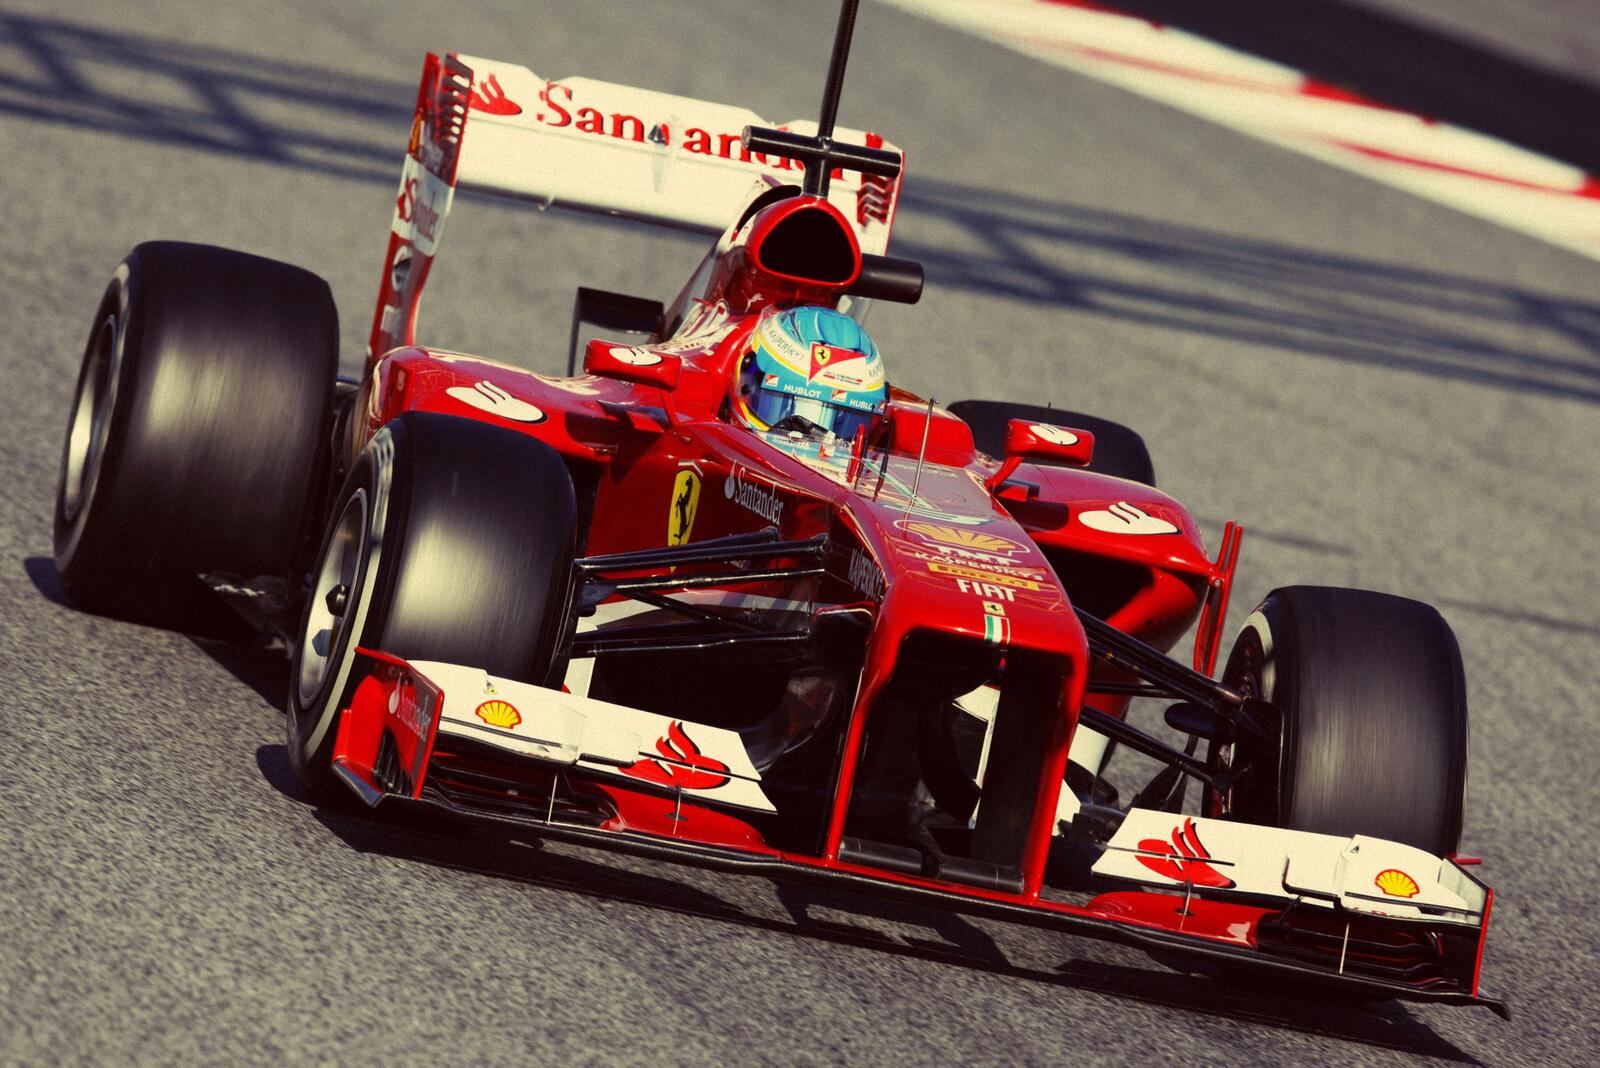 Wallpapers Formula 1 race track on the desktop